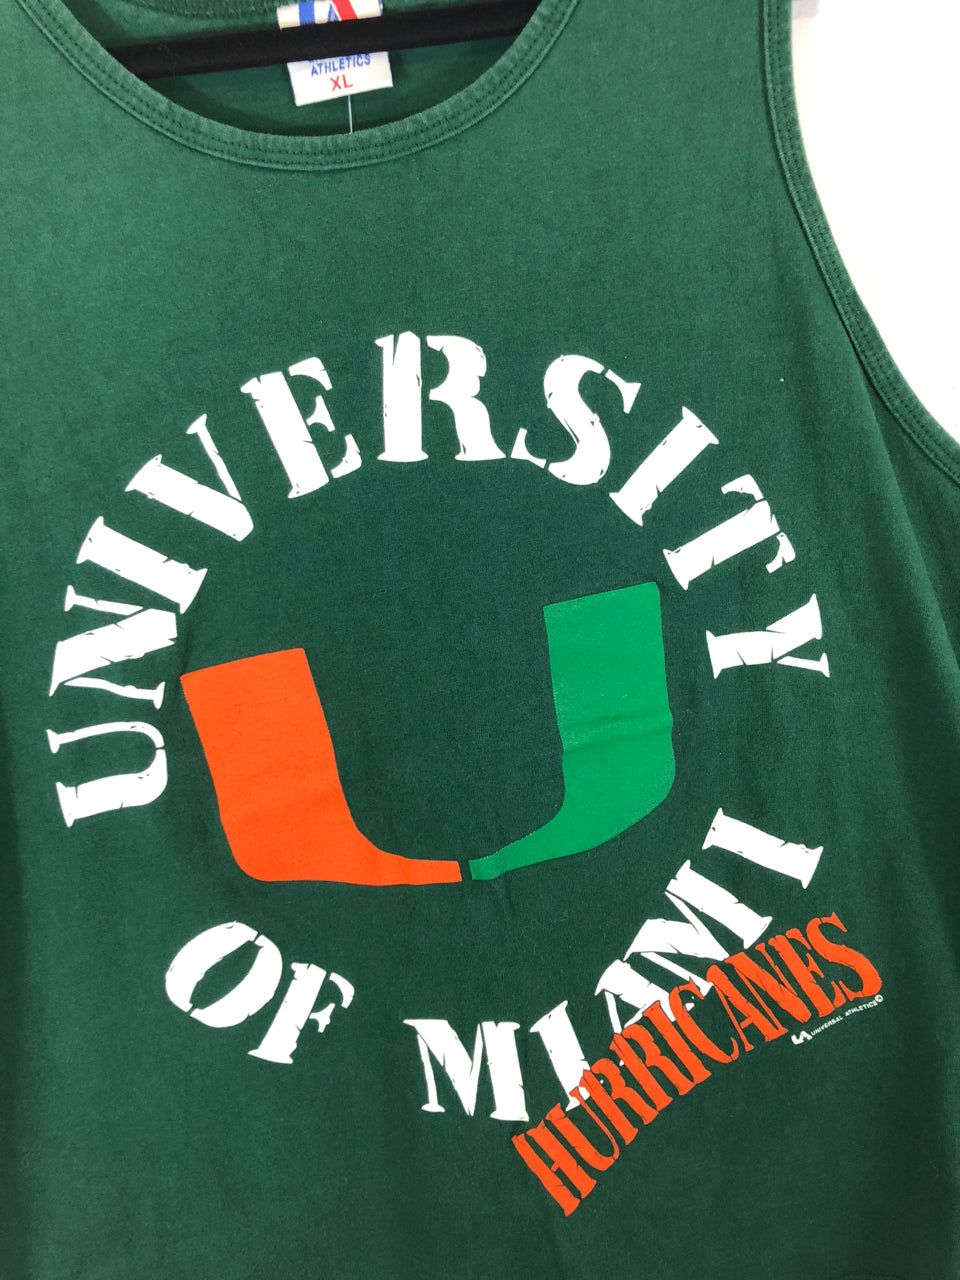 University of Miami Tank Top